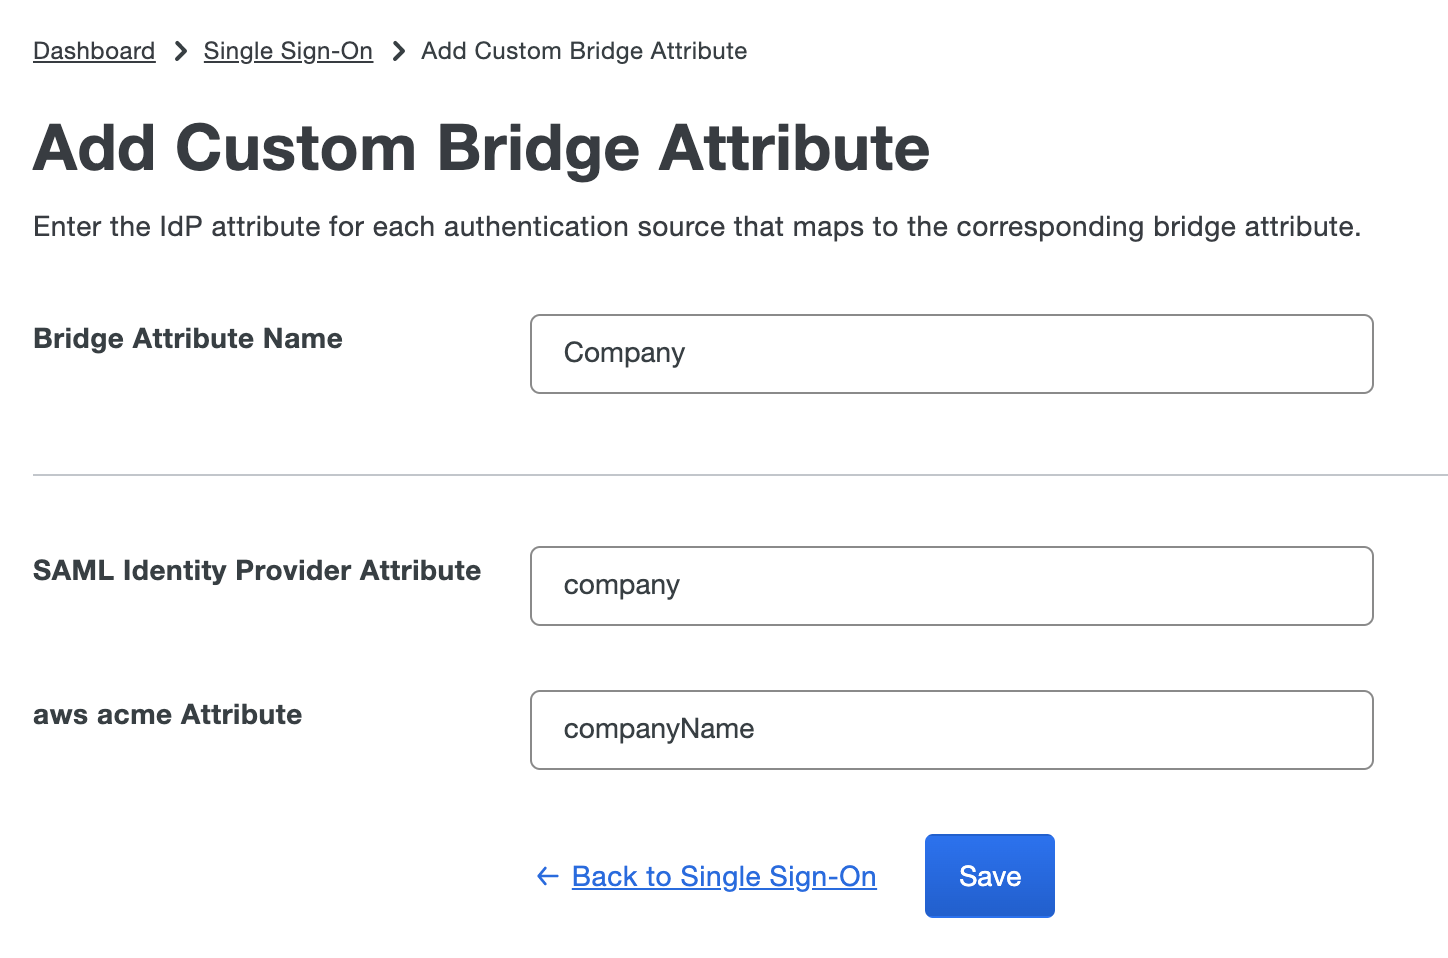 Creating a Custom Bridge Attribute